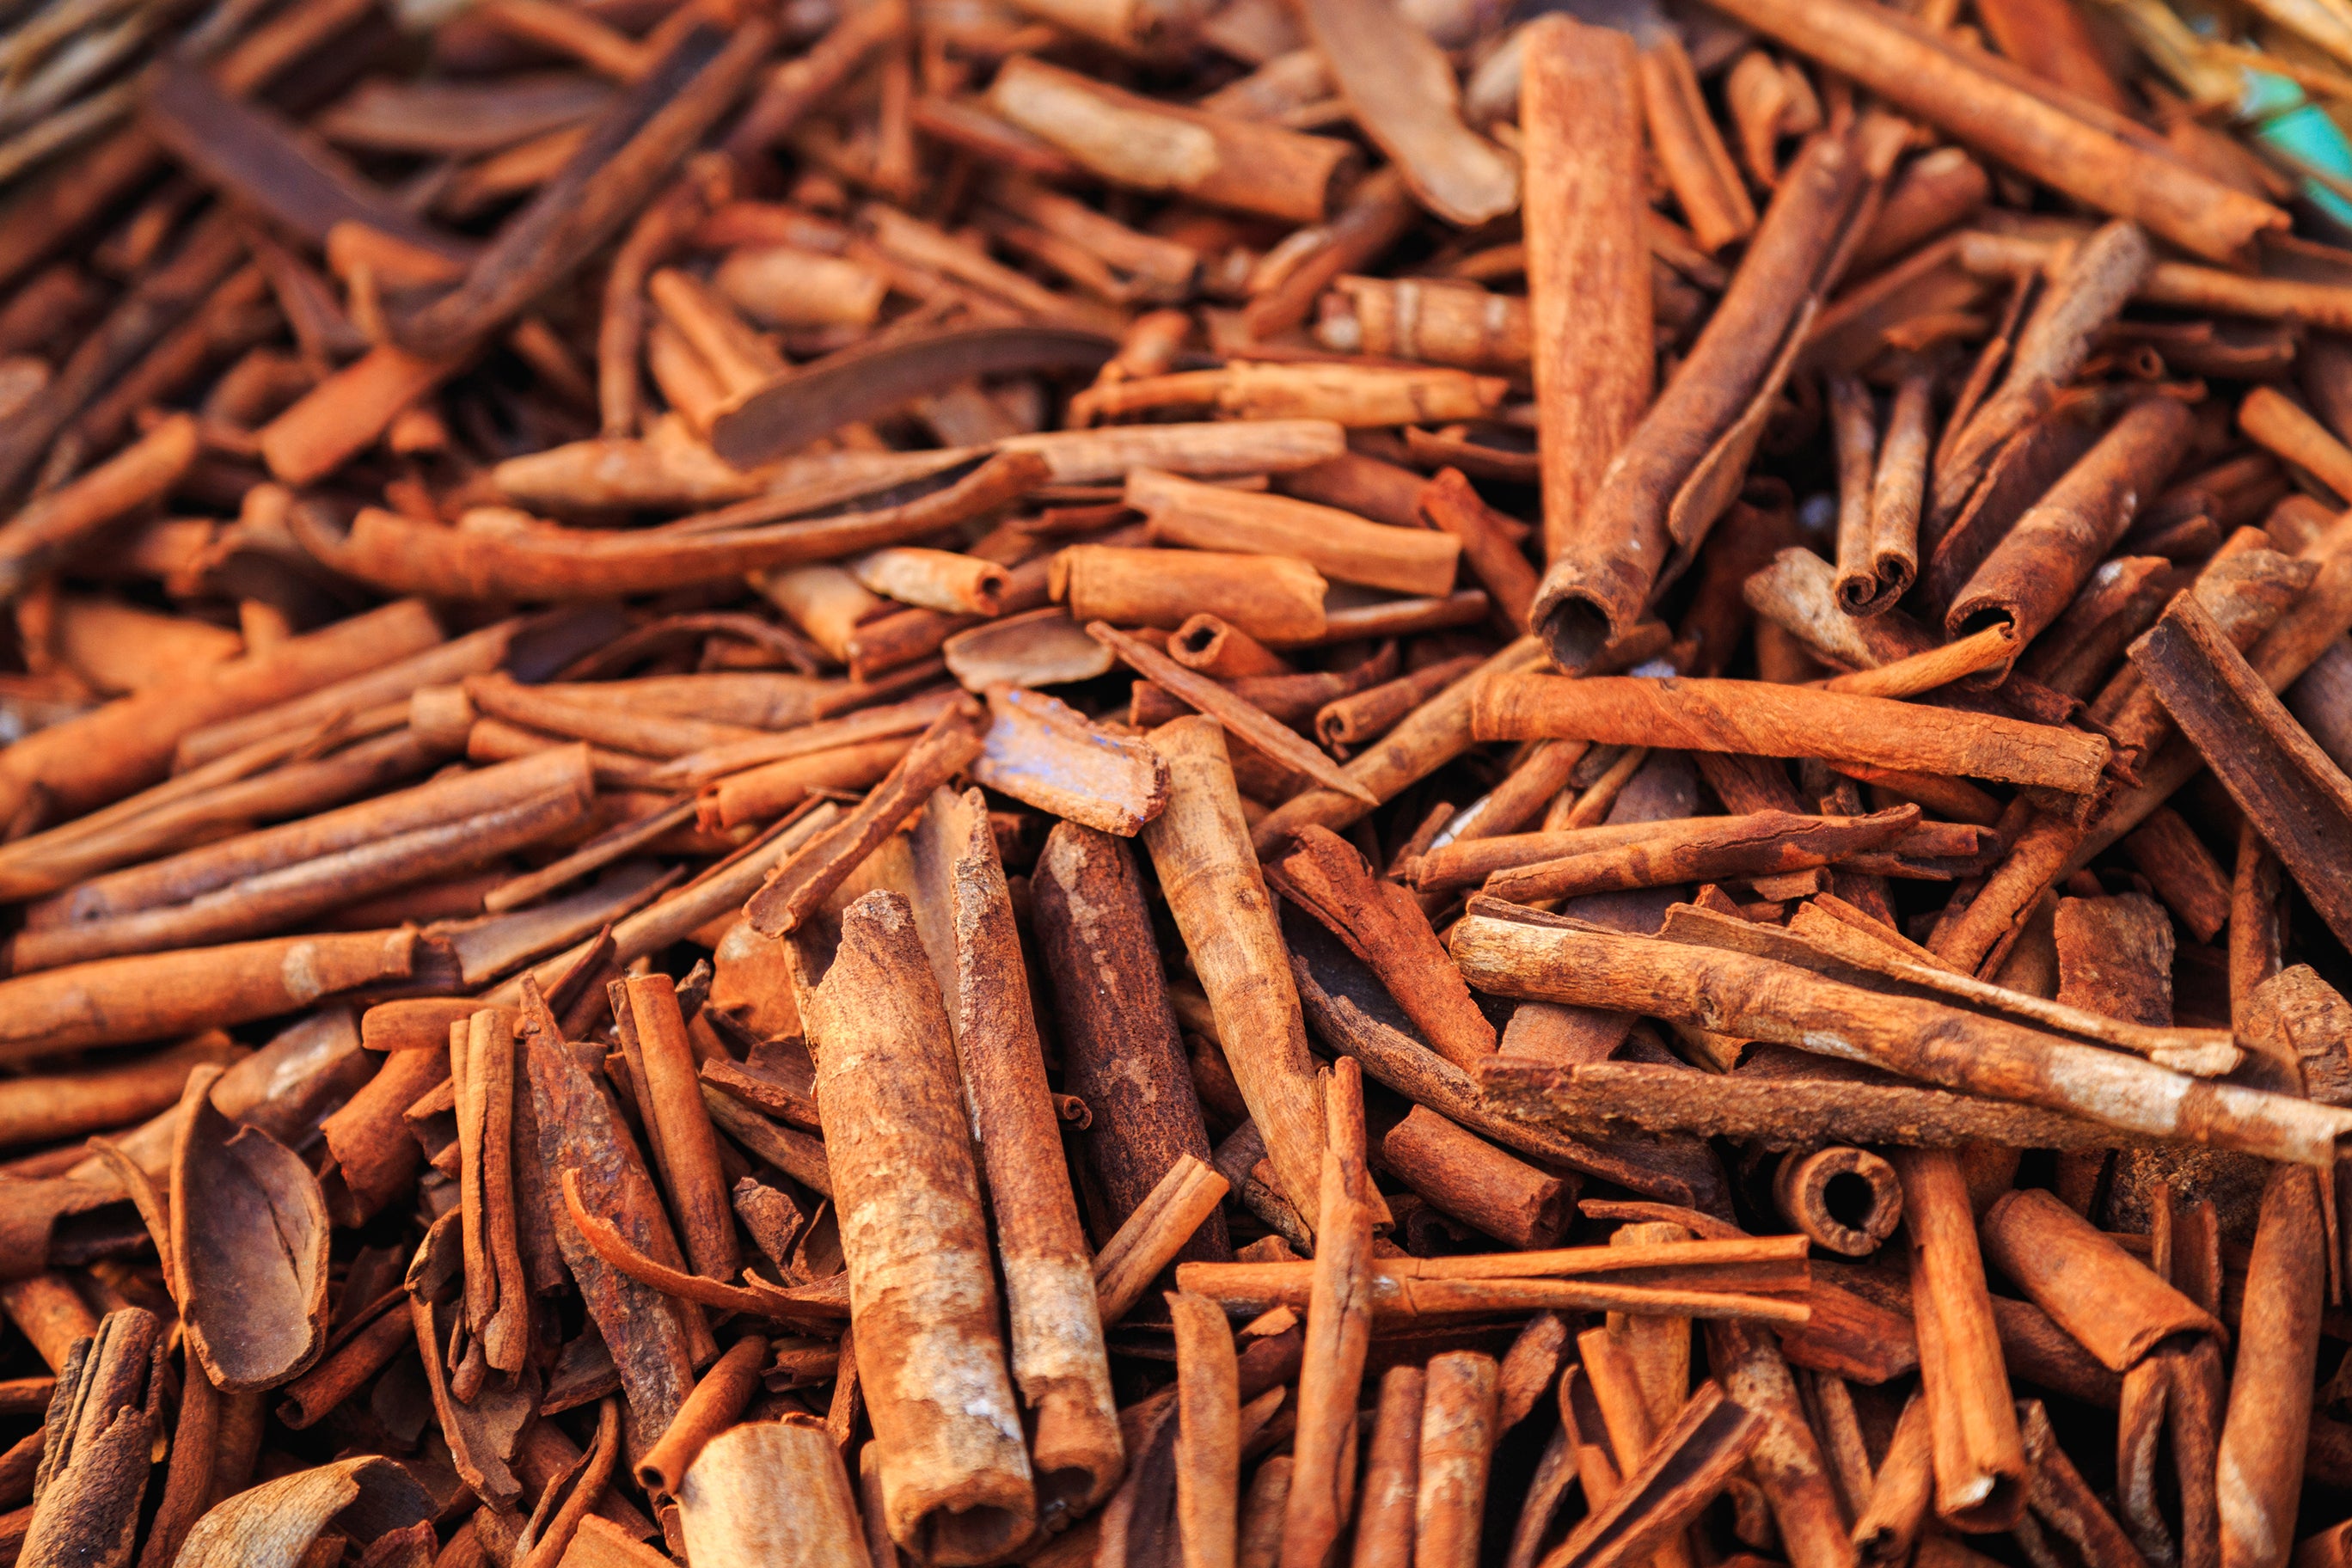 Fresh cinnamon sticks used in Kekoa Foods baby puree.